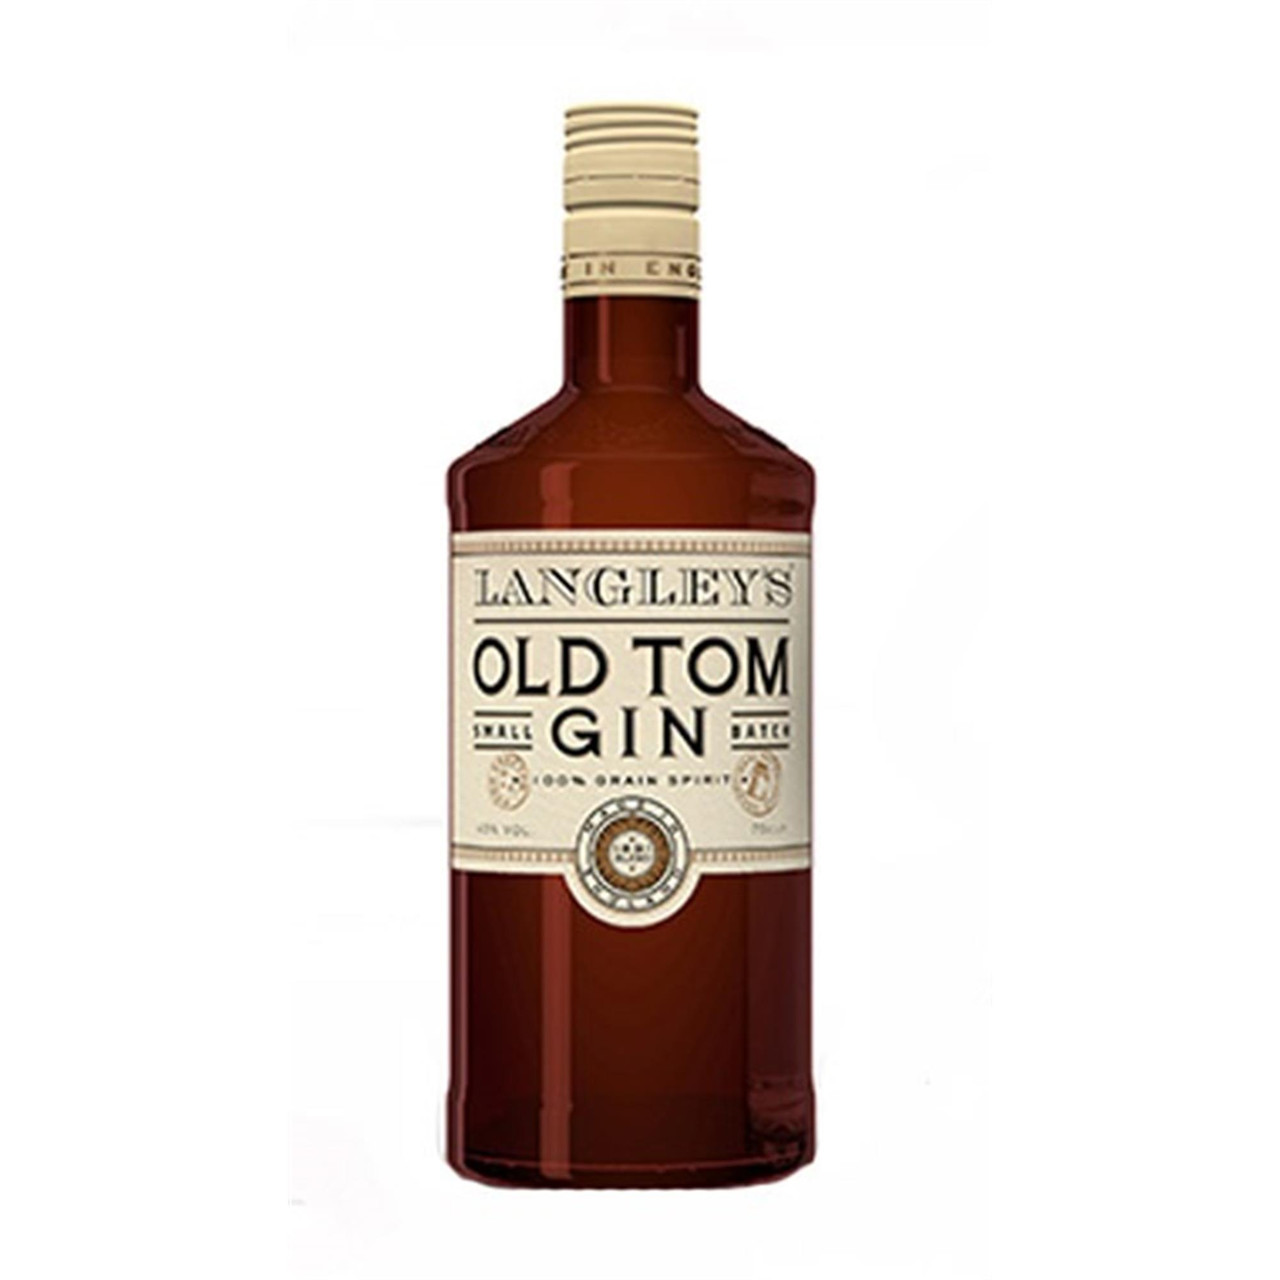 Langleys Old Tom Gin 700 Ml Keg N Cork Liquor Company Ltd